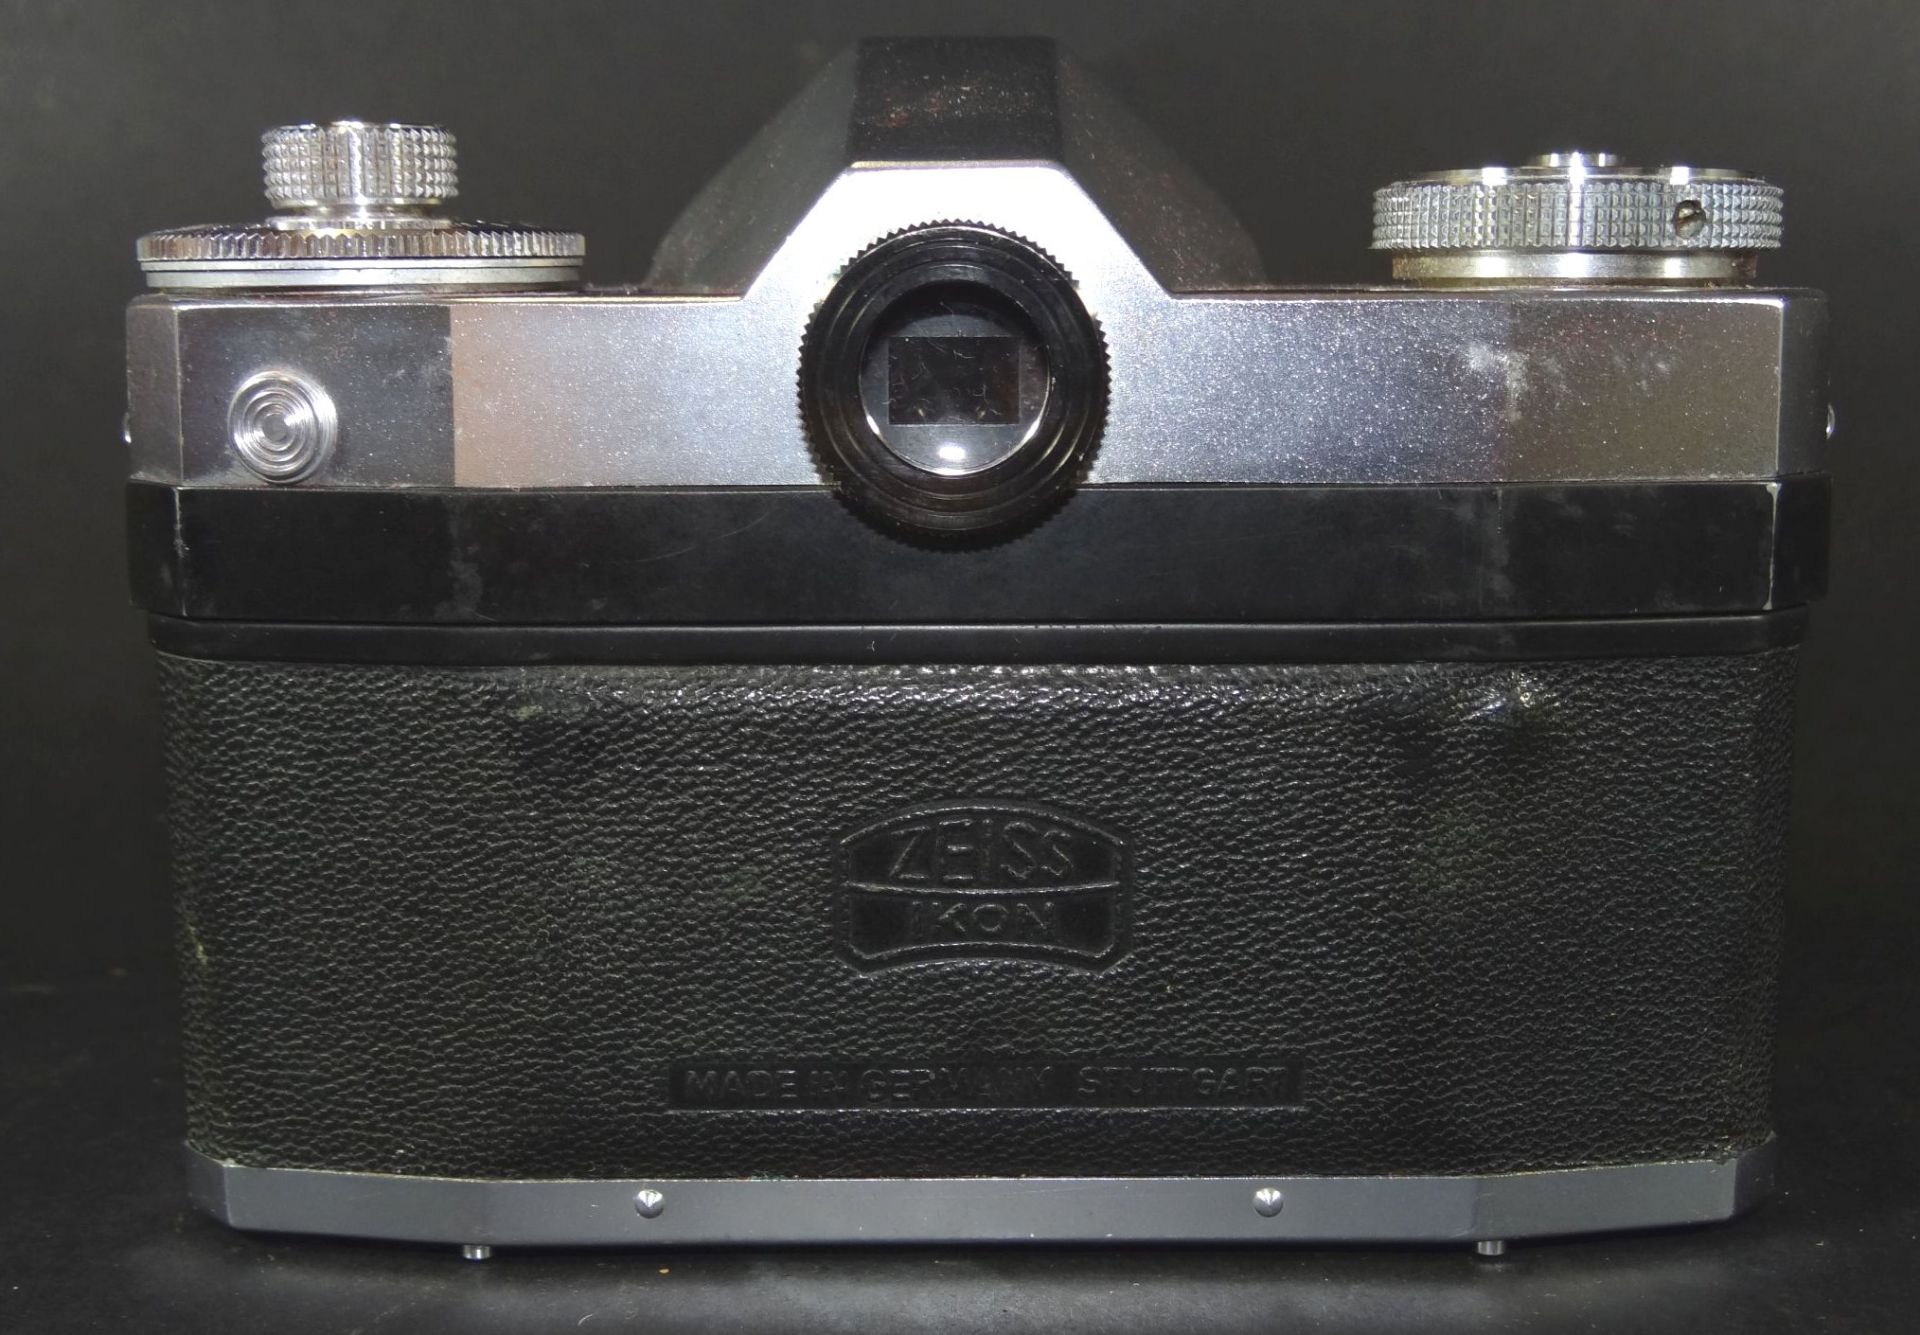 alte Spiegelreflex-Kamera "Zeiss Ikon-Conraflex" in Lederhülle, Objektiv Carl Zeiss Tessar 1:2,8- - Bild 6 aus 9